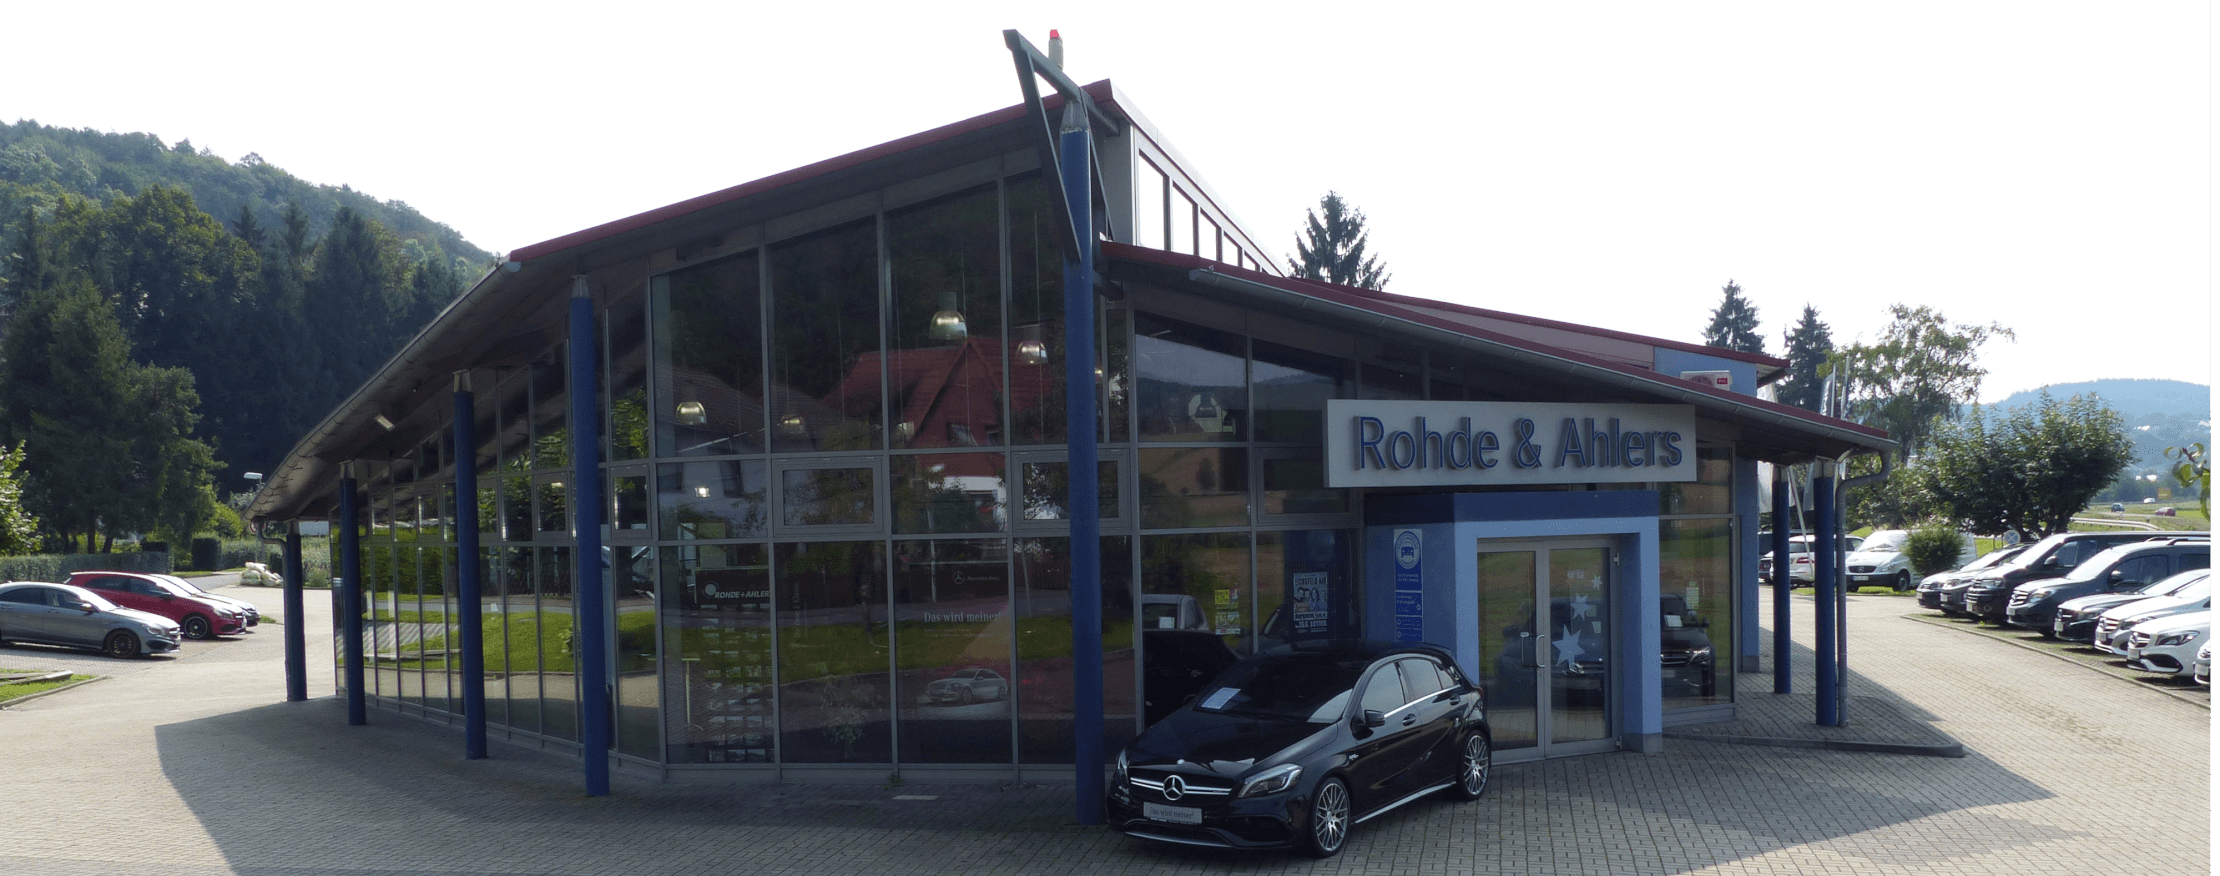 Autohaus Rohde und Ahlers